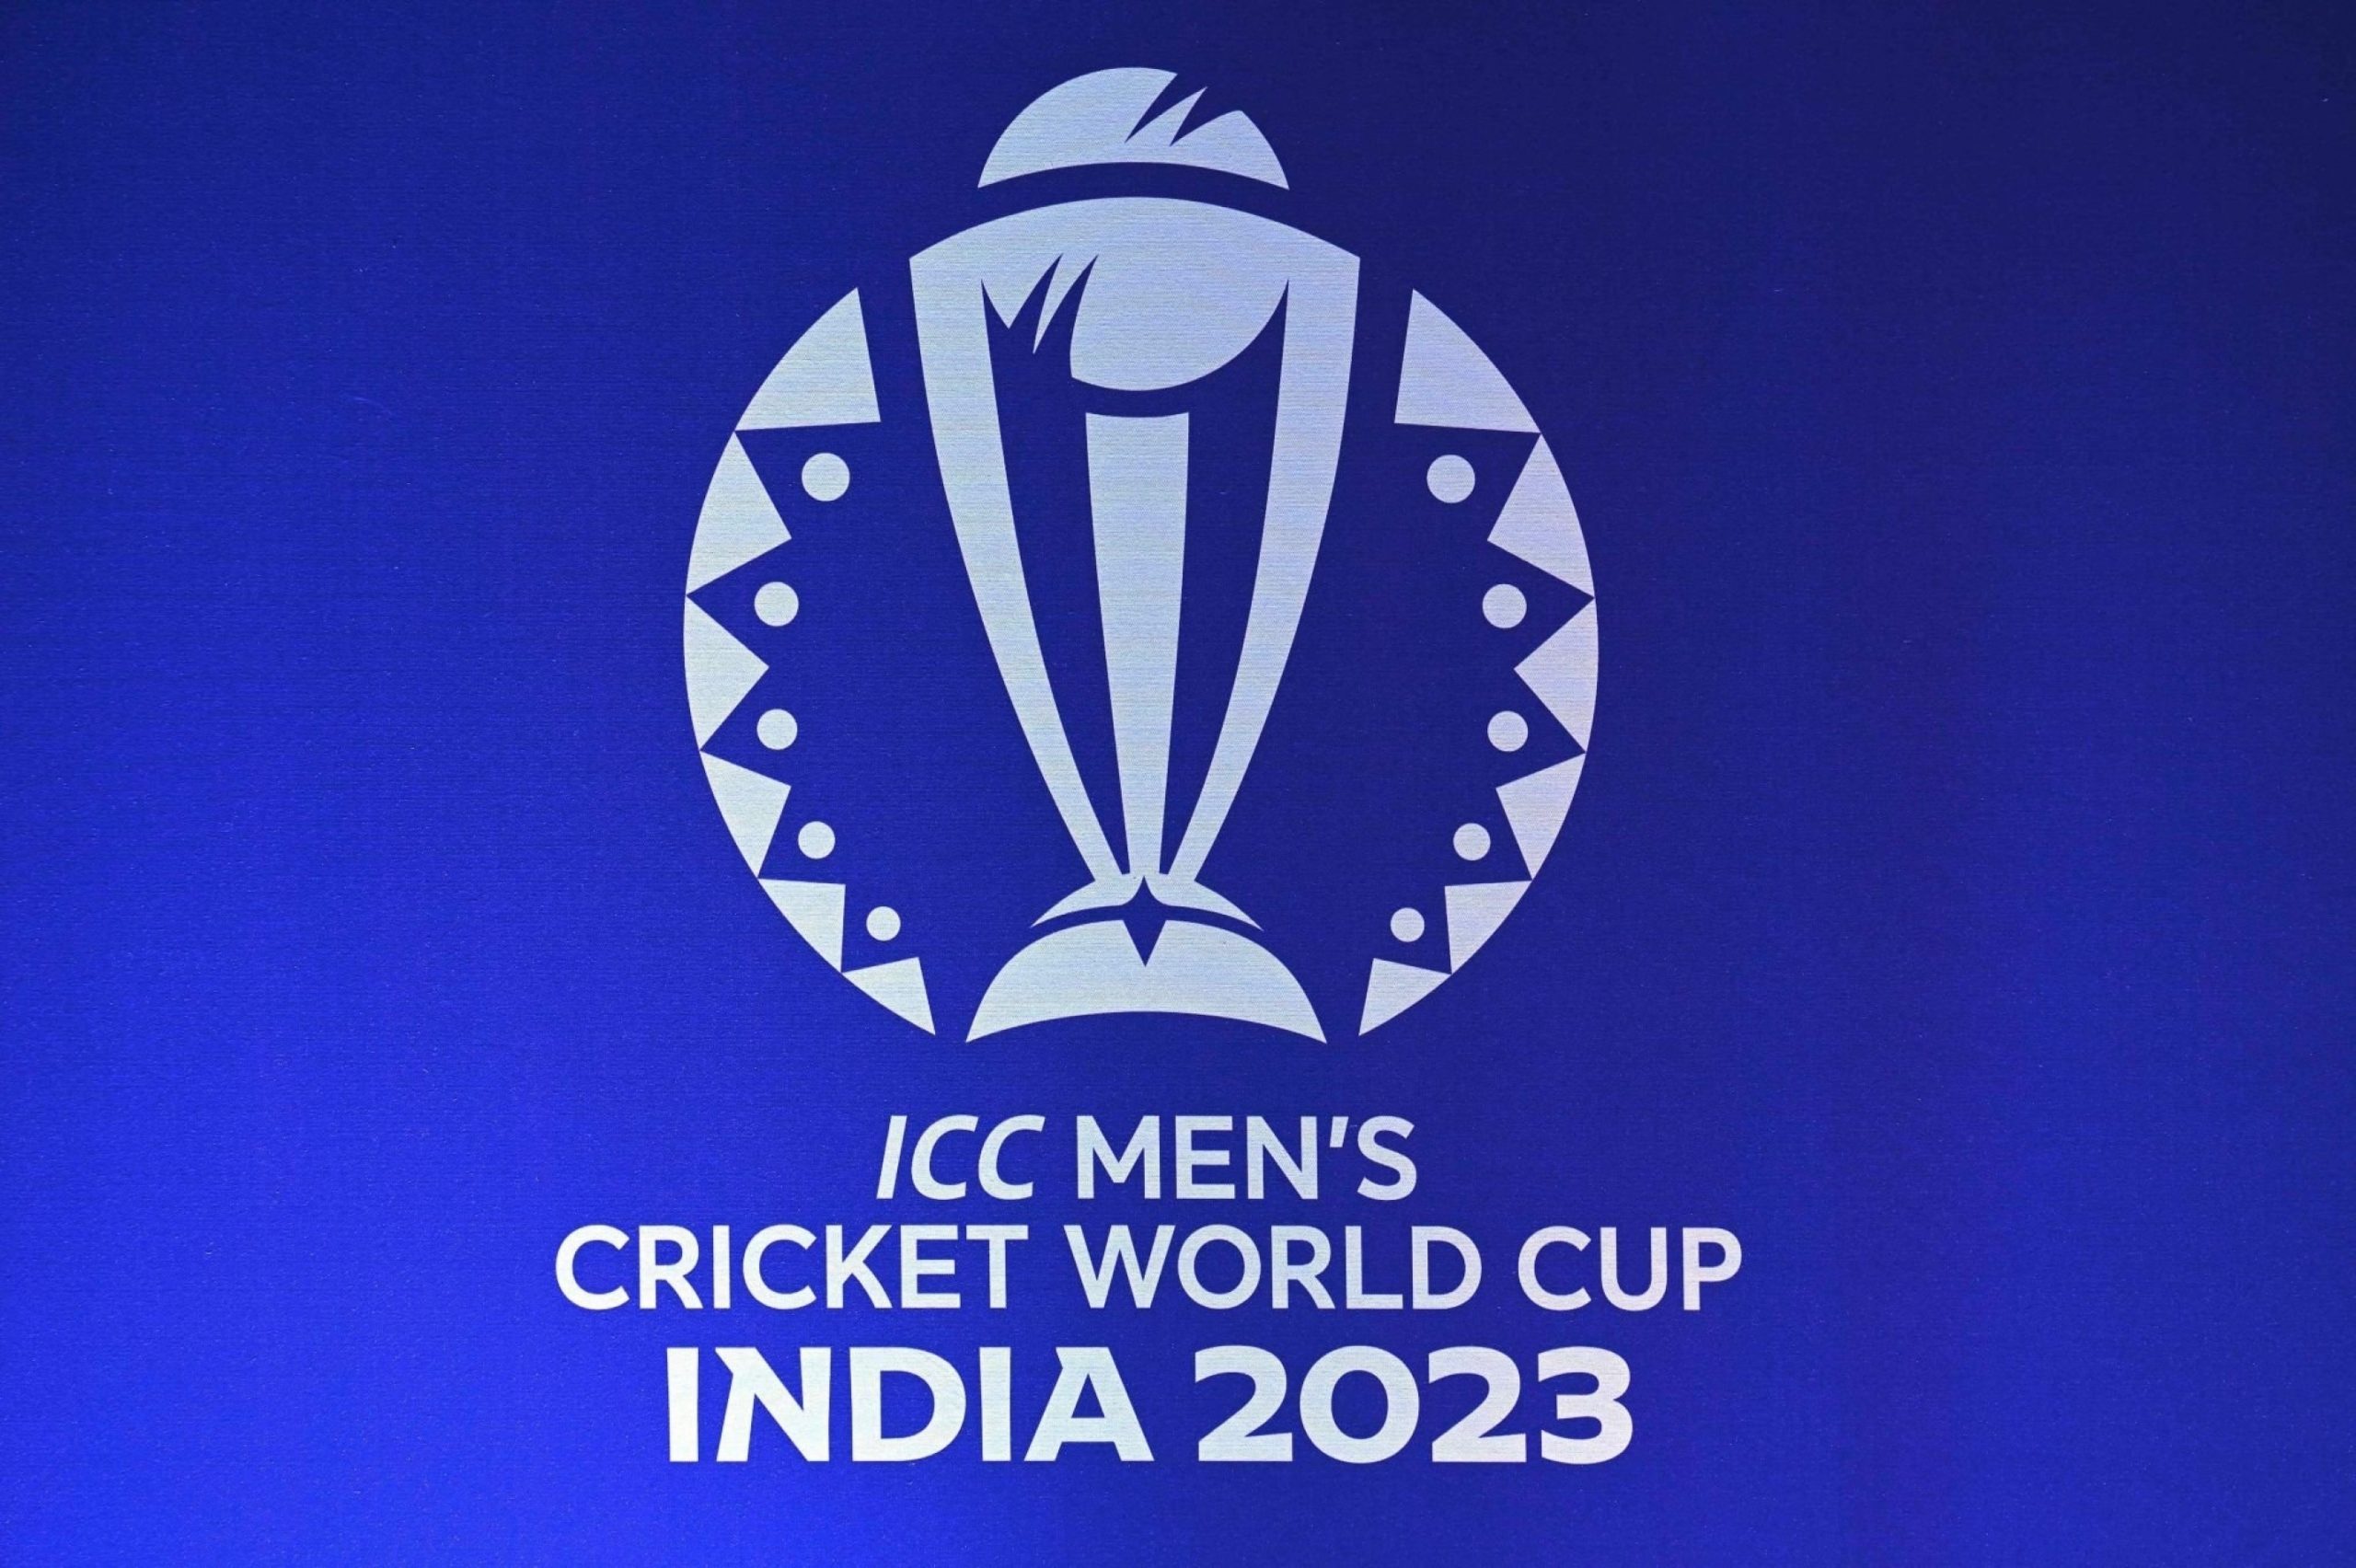 World Cup Qualifiers 2023: 10 జట్లు.. 34 మ్యాచ్‌లు.. జూన్ 18 నుంచే వరల్డ్  కప్ క్వాలిఫయర్స్.. - Telugu News | The World Cup 2023 qualifier matches  will be held in Zimbabwe from June 18